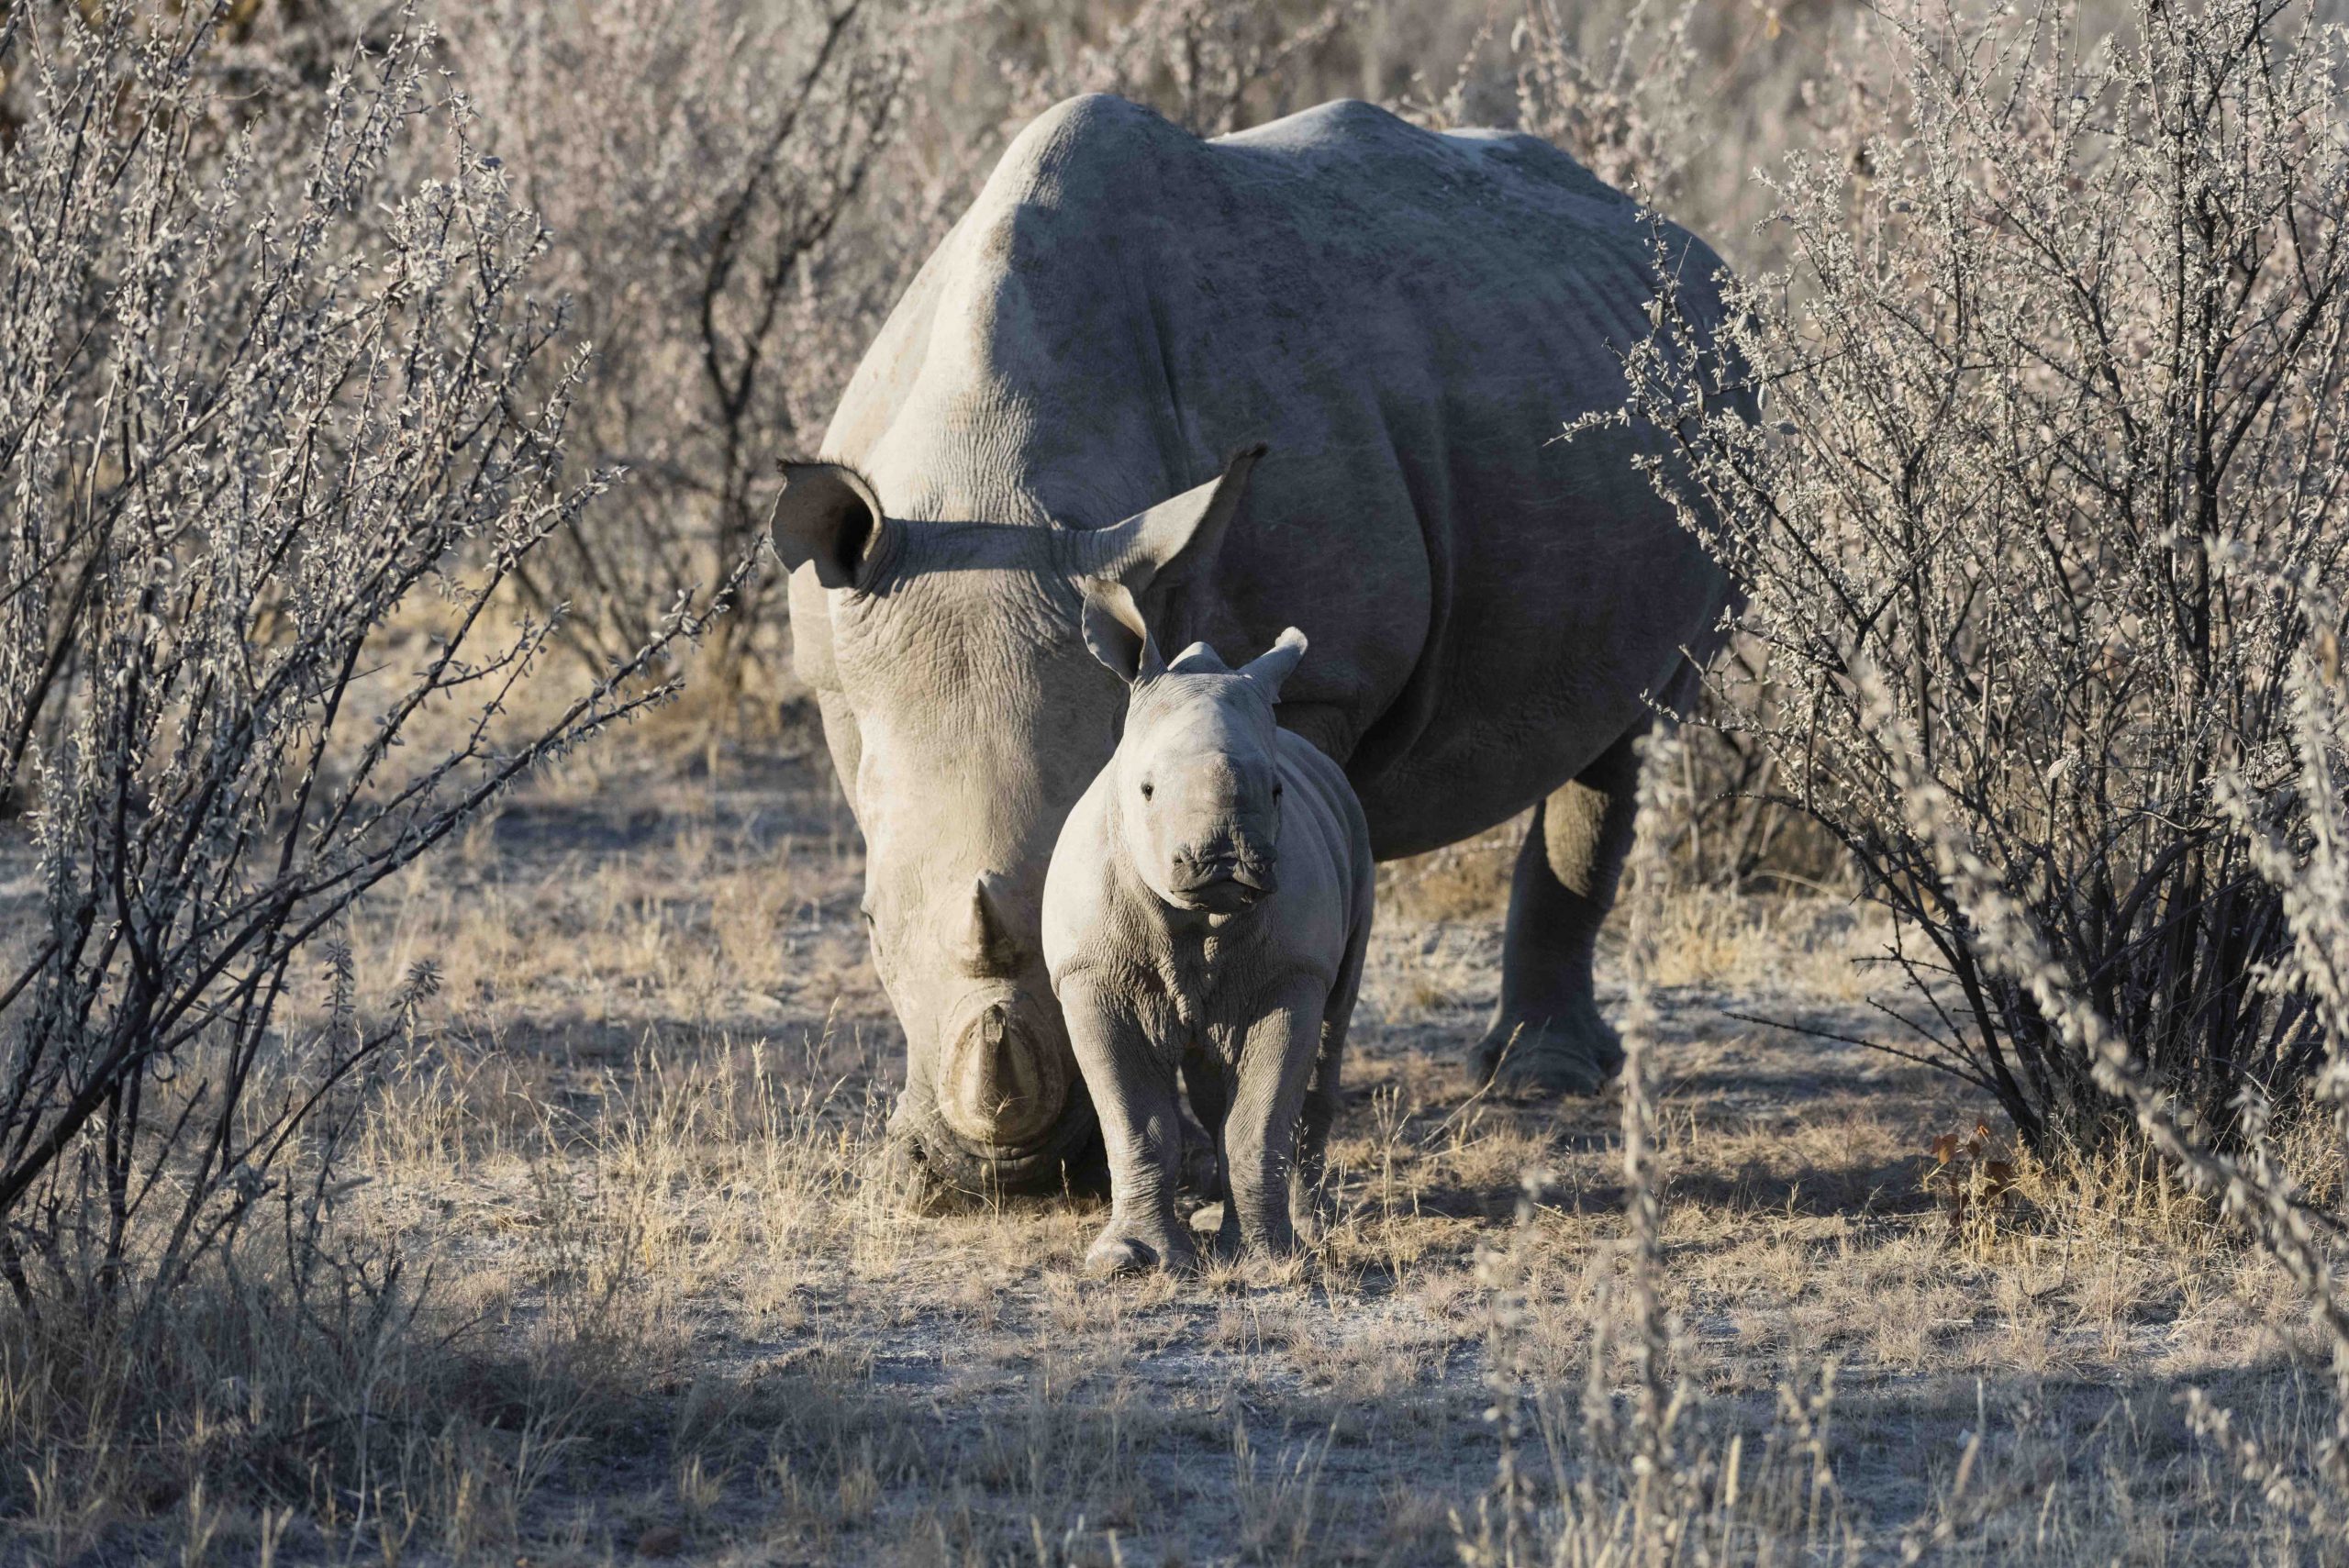 Tracking Rhinos on Foot